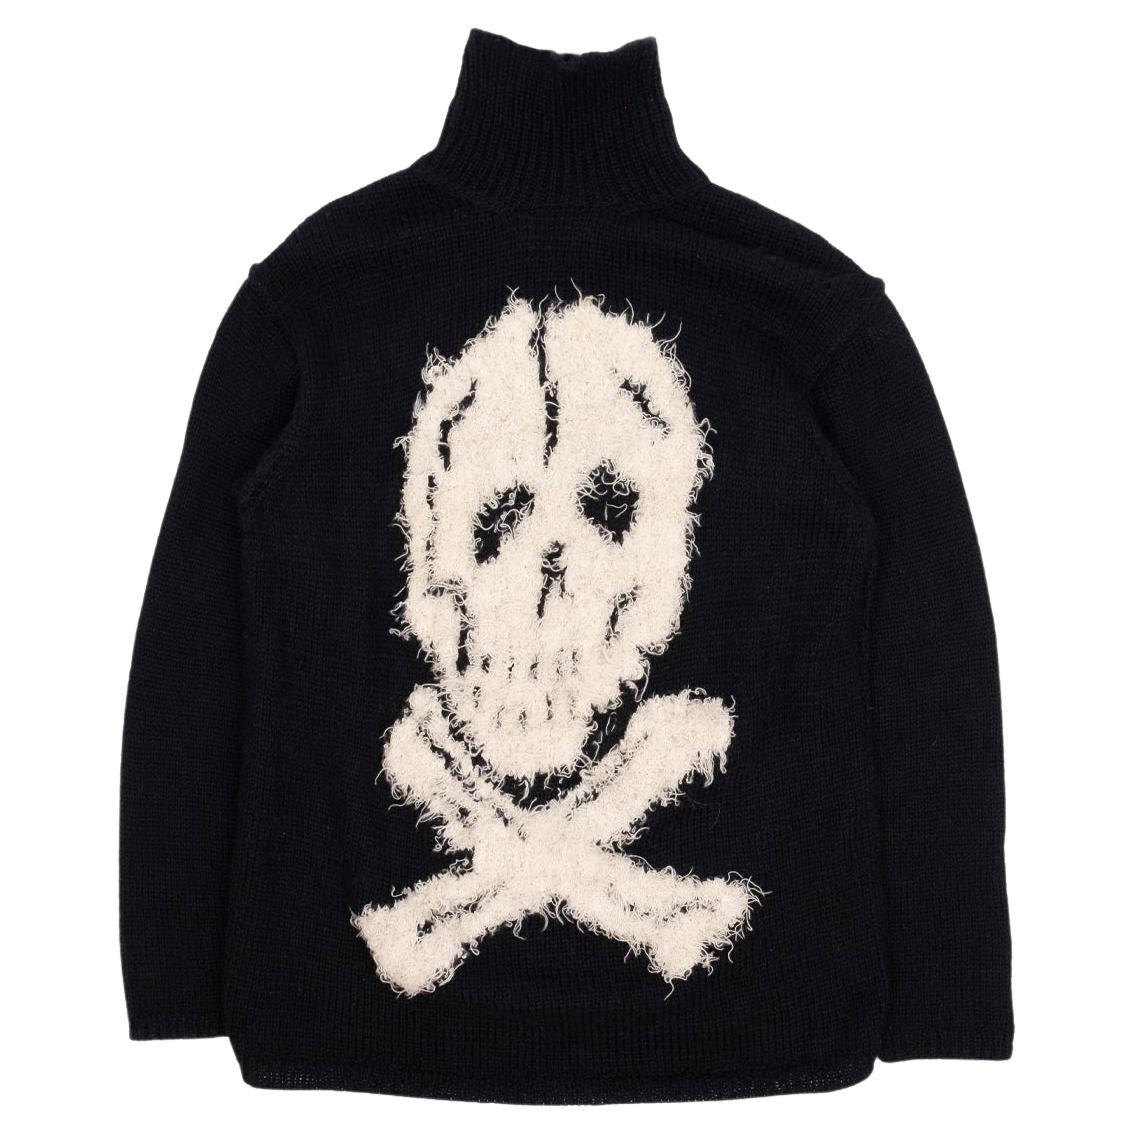 Kleding Dameskleding Sweaters Pullovers Vtg YOHJI YAMAMOTO Y'S Japan Pure Indigo Trui Trui Pullover 